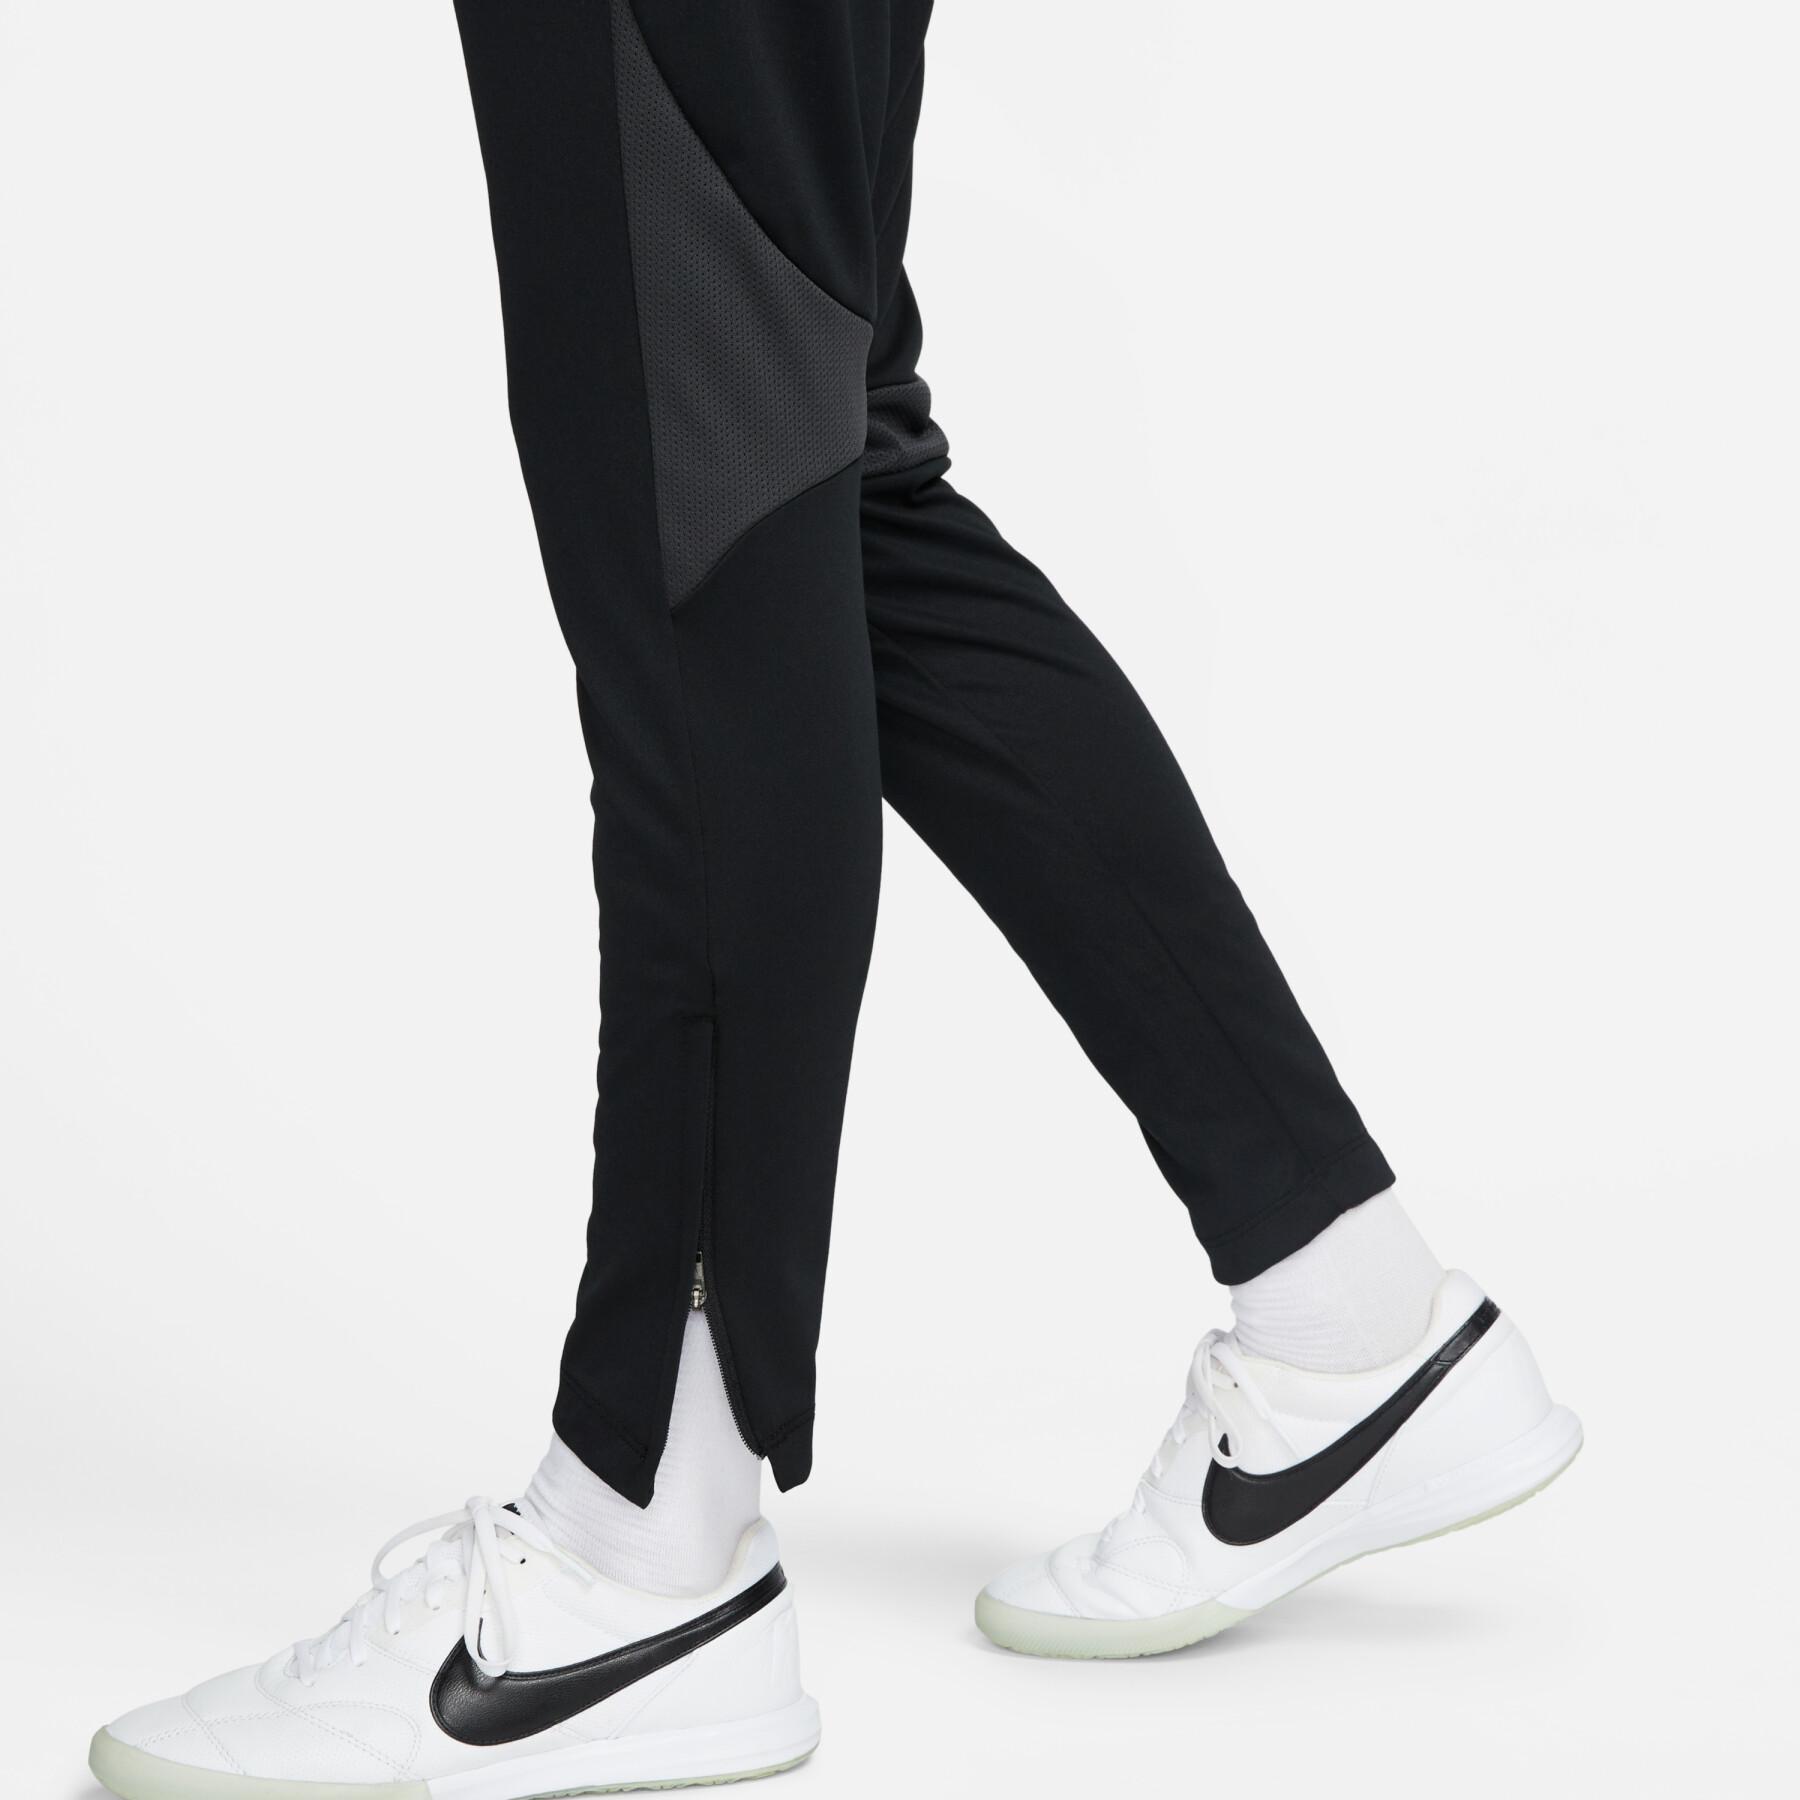 Women's Nike Academy pro Sweatpants suit 